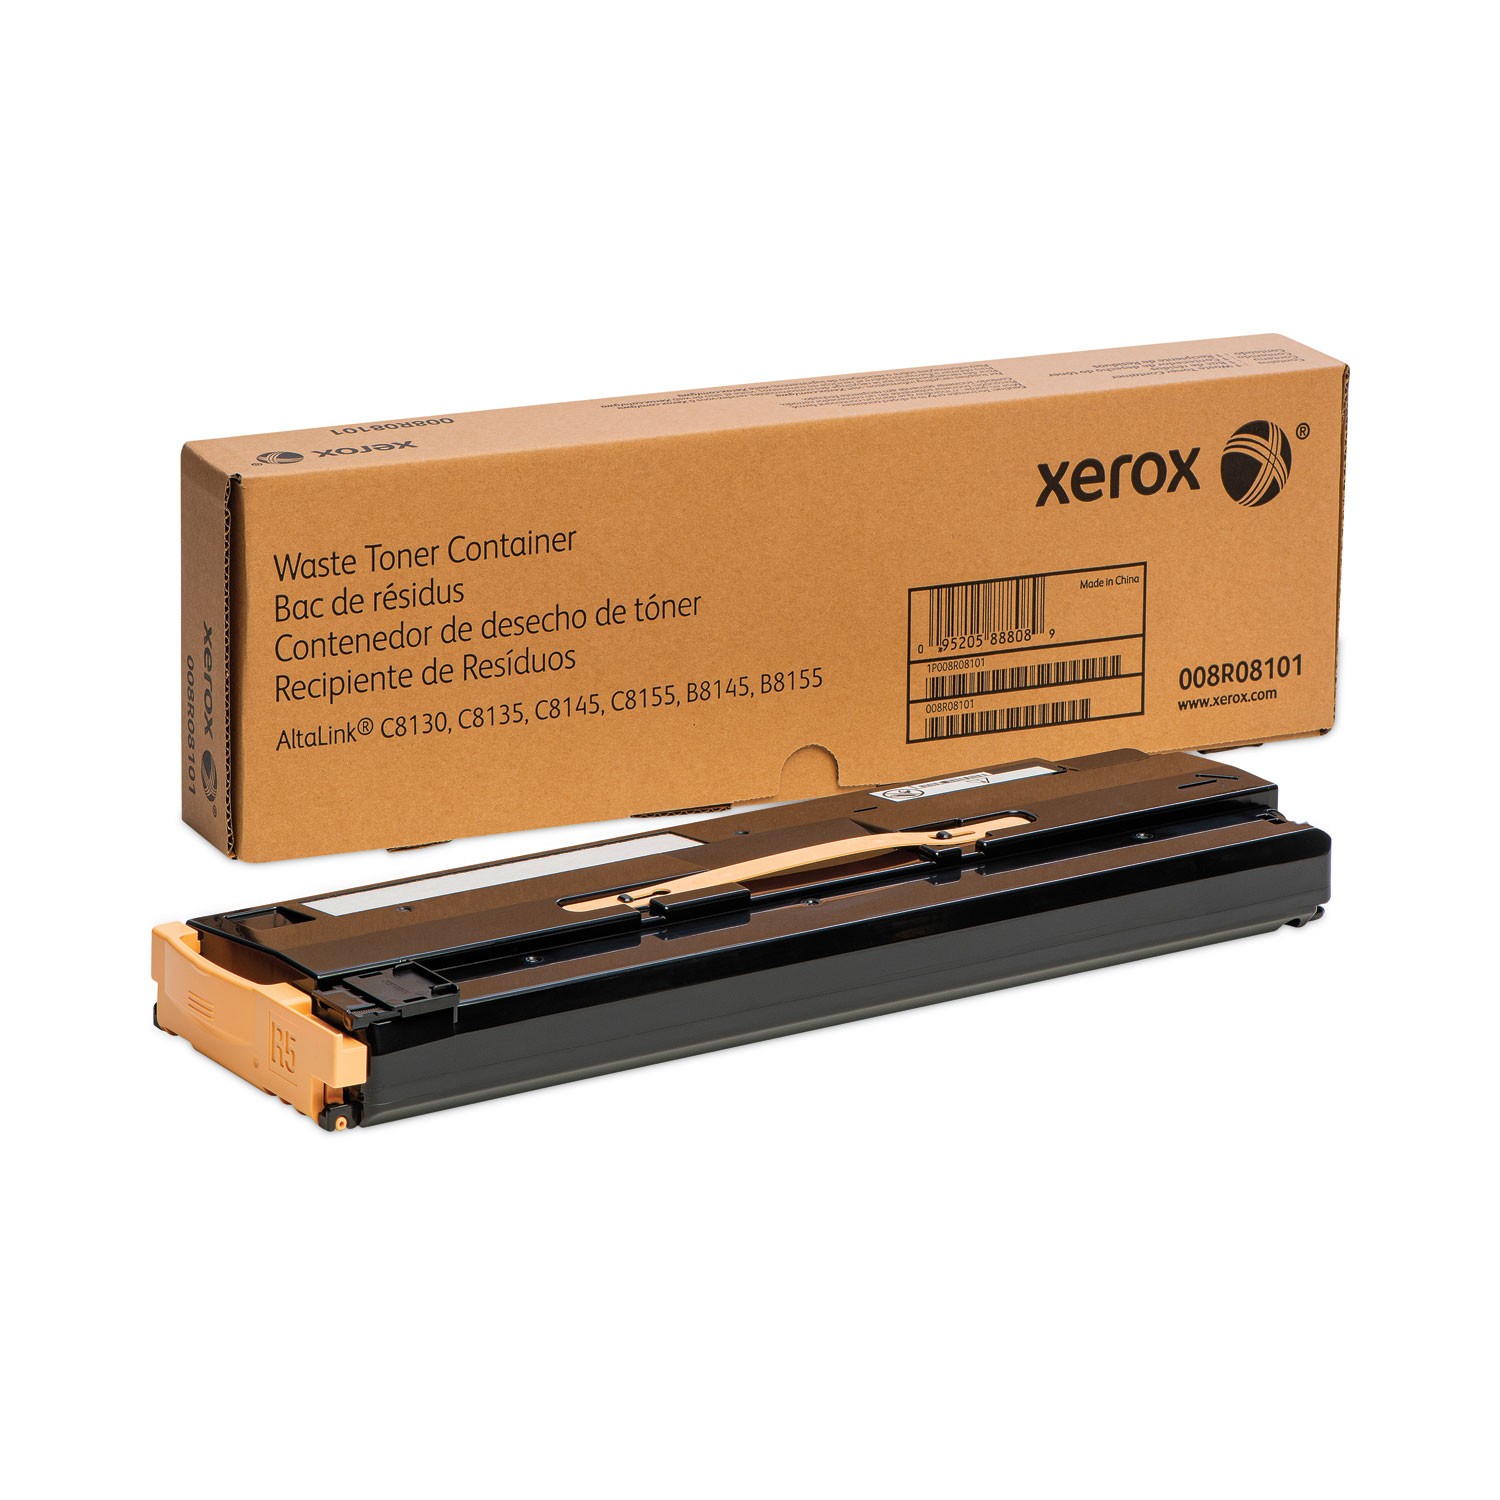 Xerox Original Black Waste High-Yield Toner Cartridge 008R08101